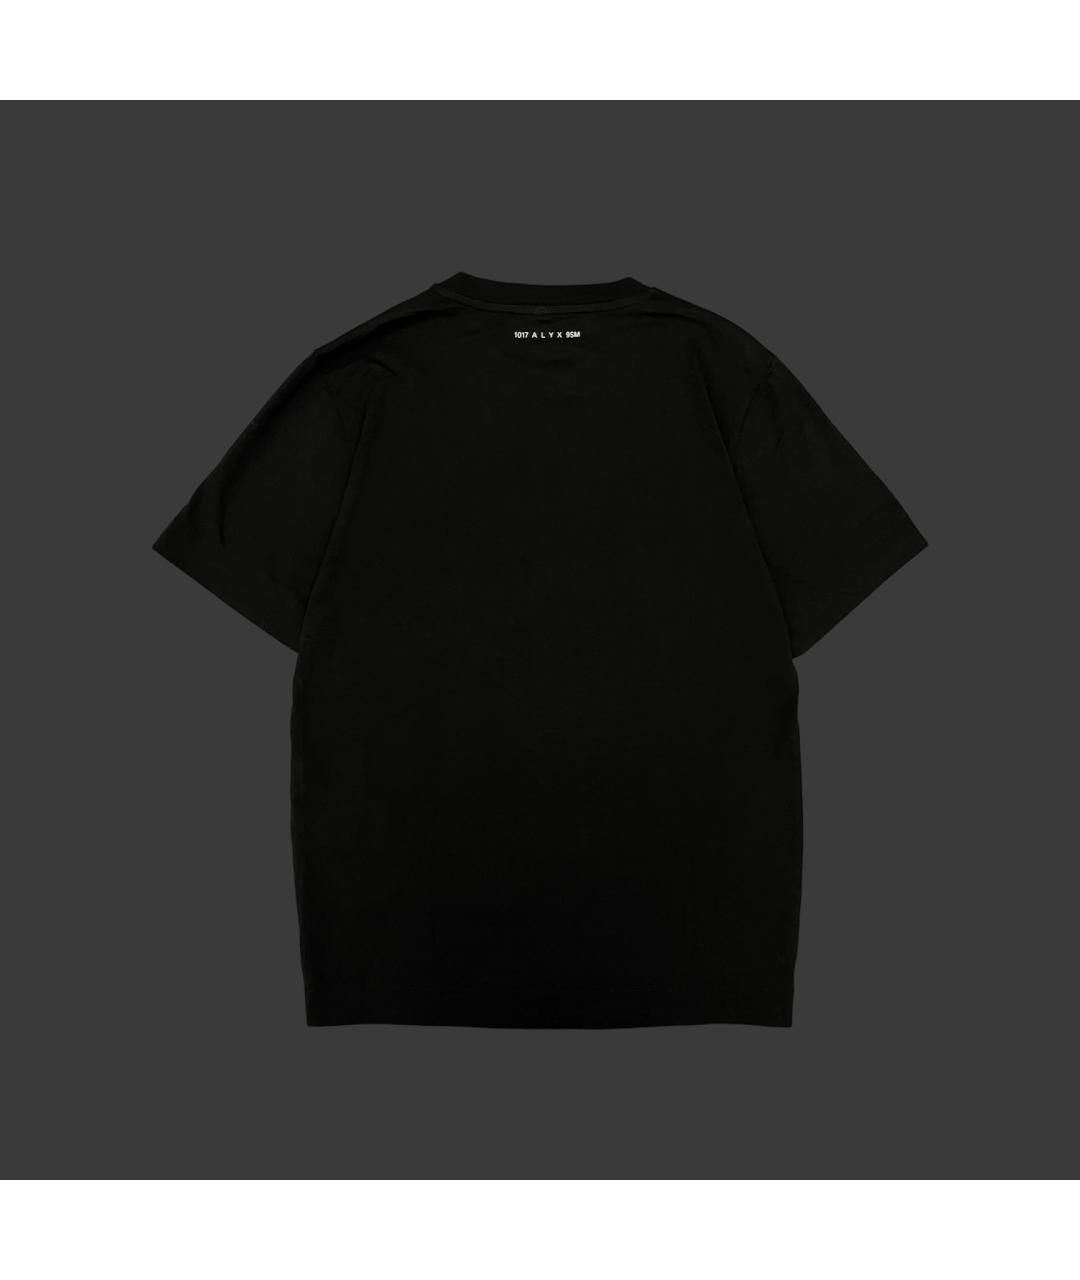 1017 ALYX 9SM Черная хлопковая футболка, фото 2